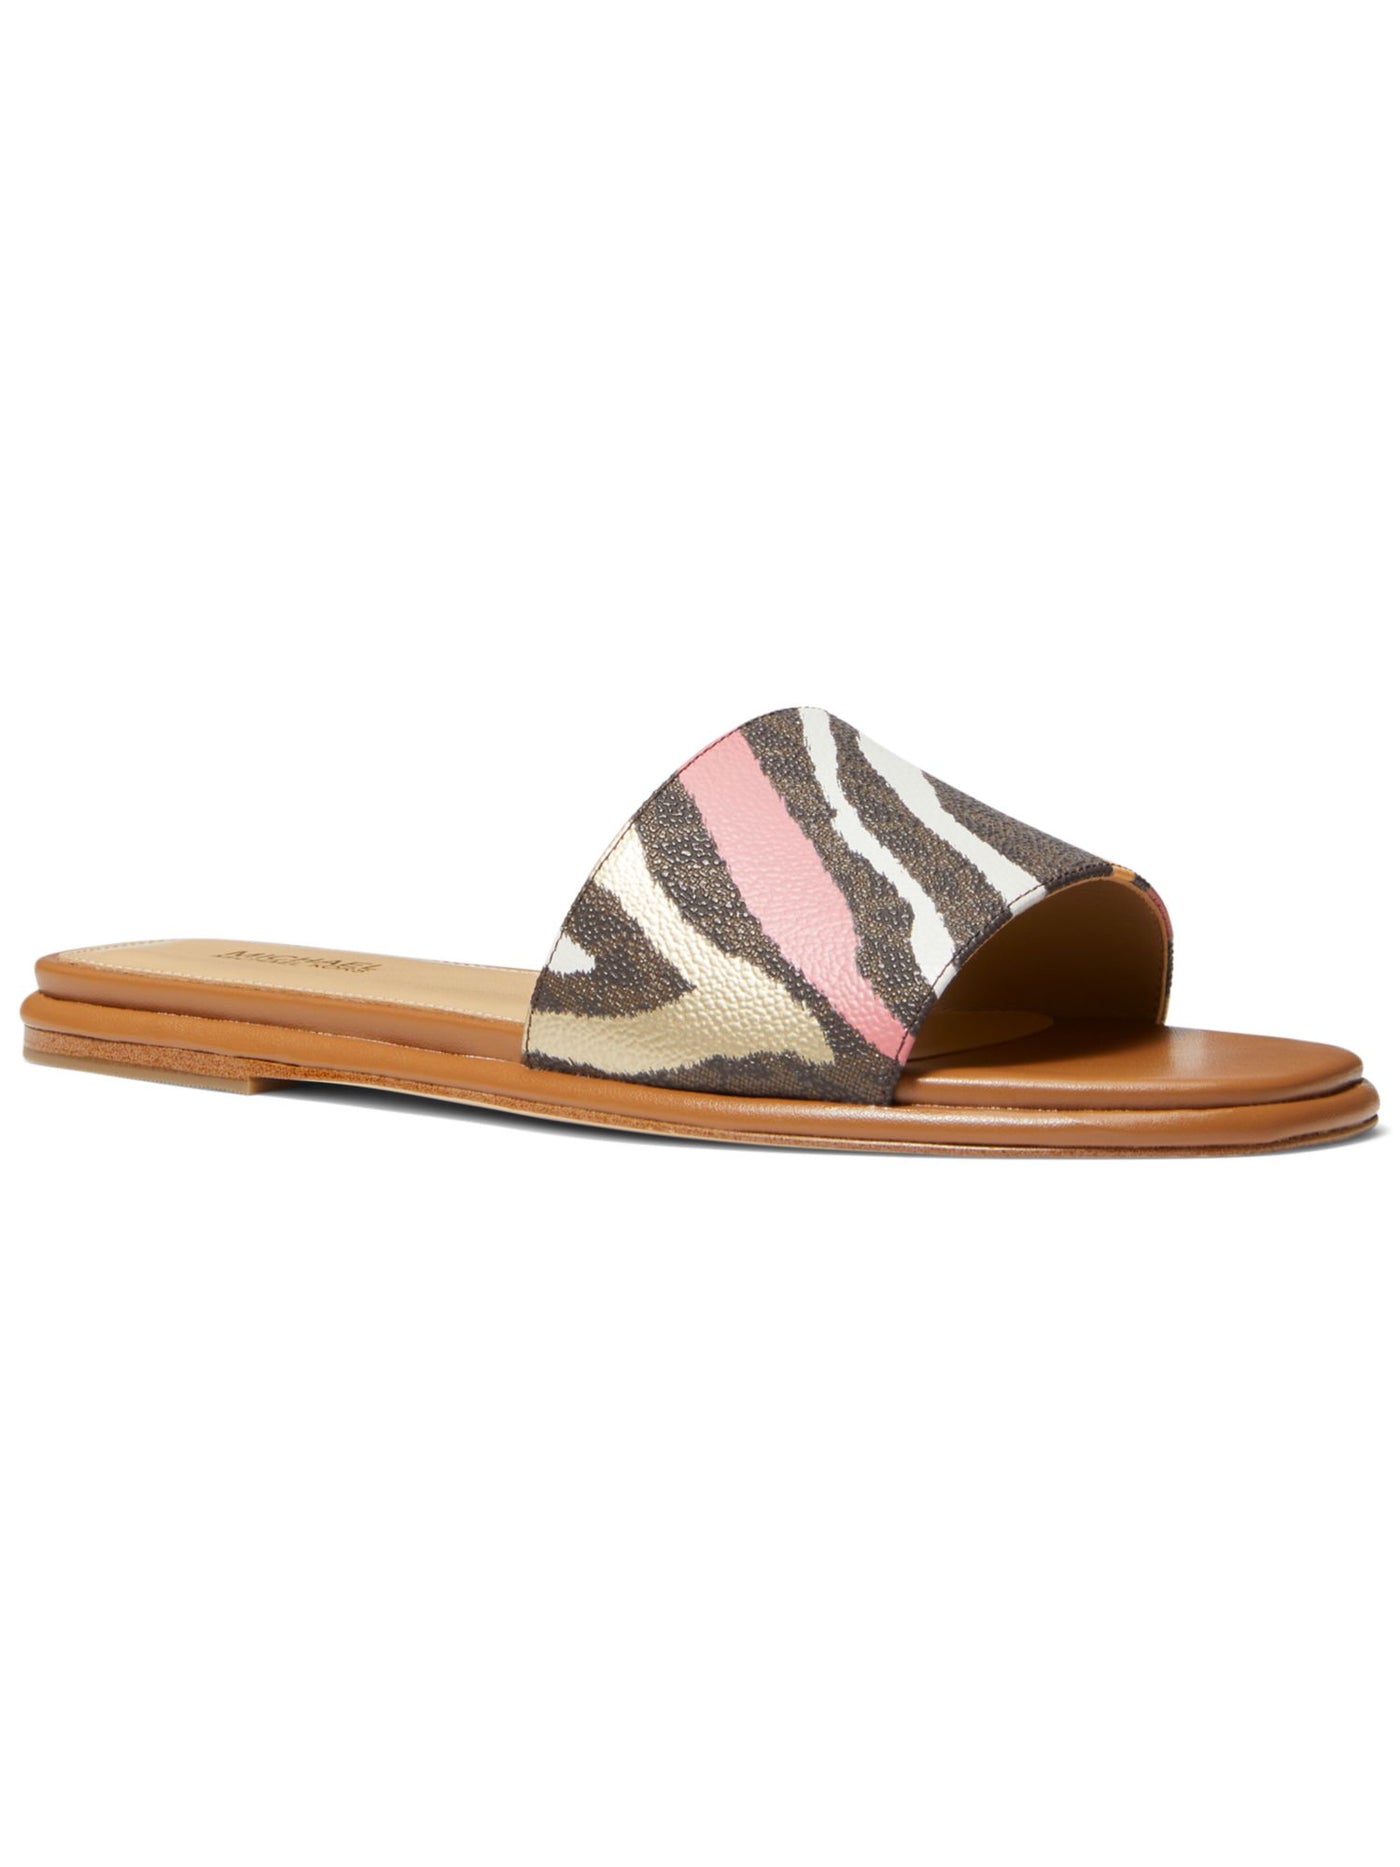 MICHAEL KORS Womens Brown Animal Stripe Print Comfort Padded Sadler Square Toe Slip On Slide Sandals Shoes 6.5